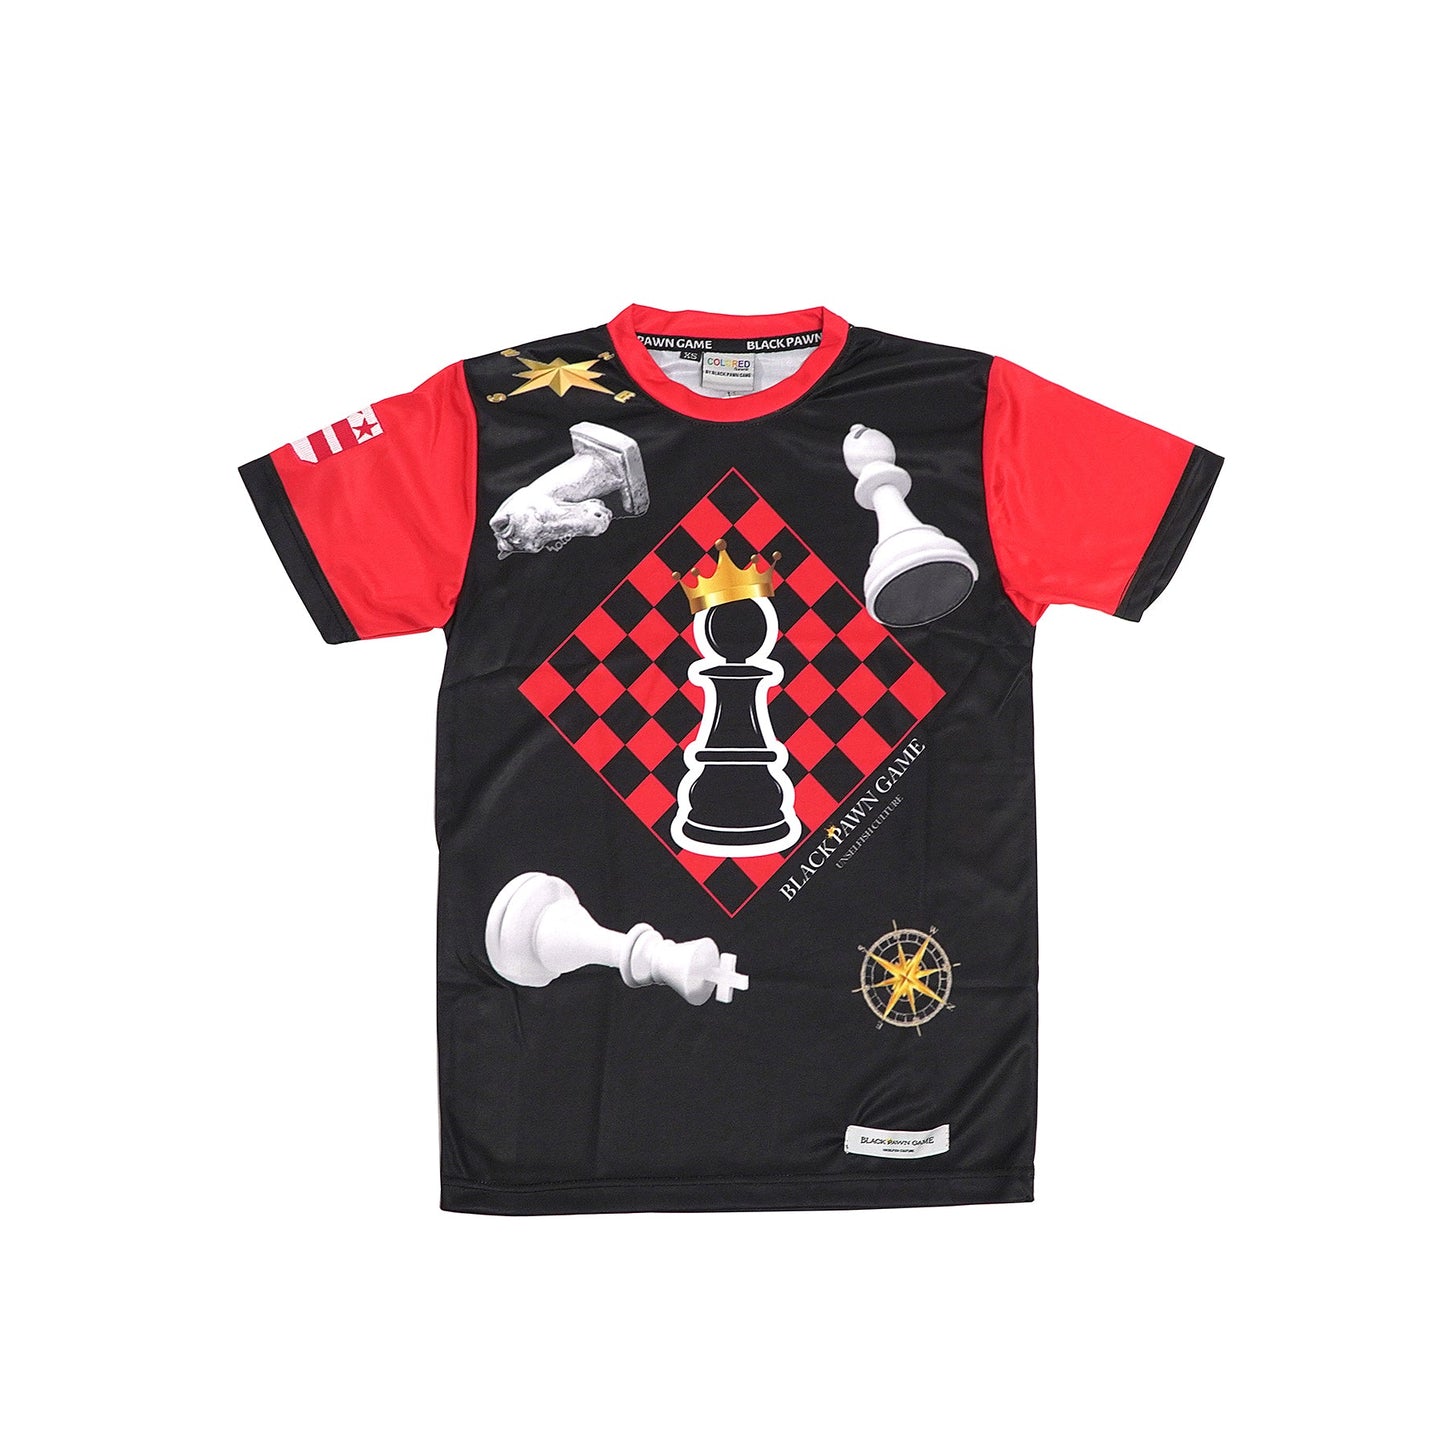 Black Pawn Game Black/Red Sublimation shirt (2XL)